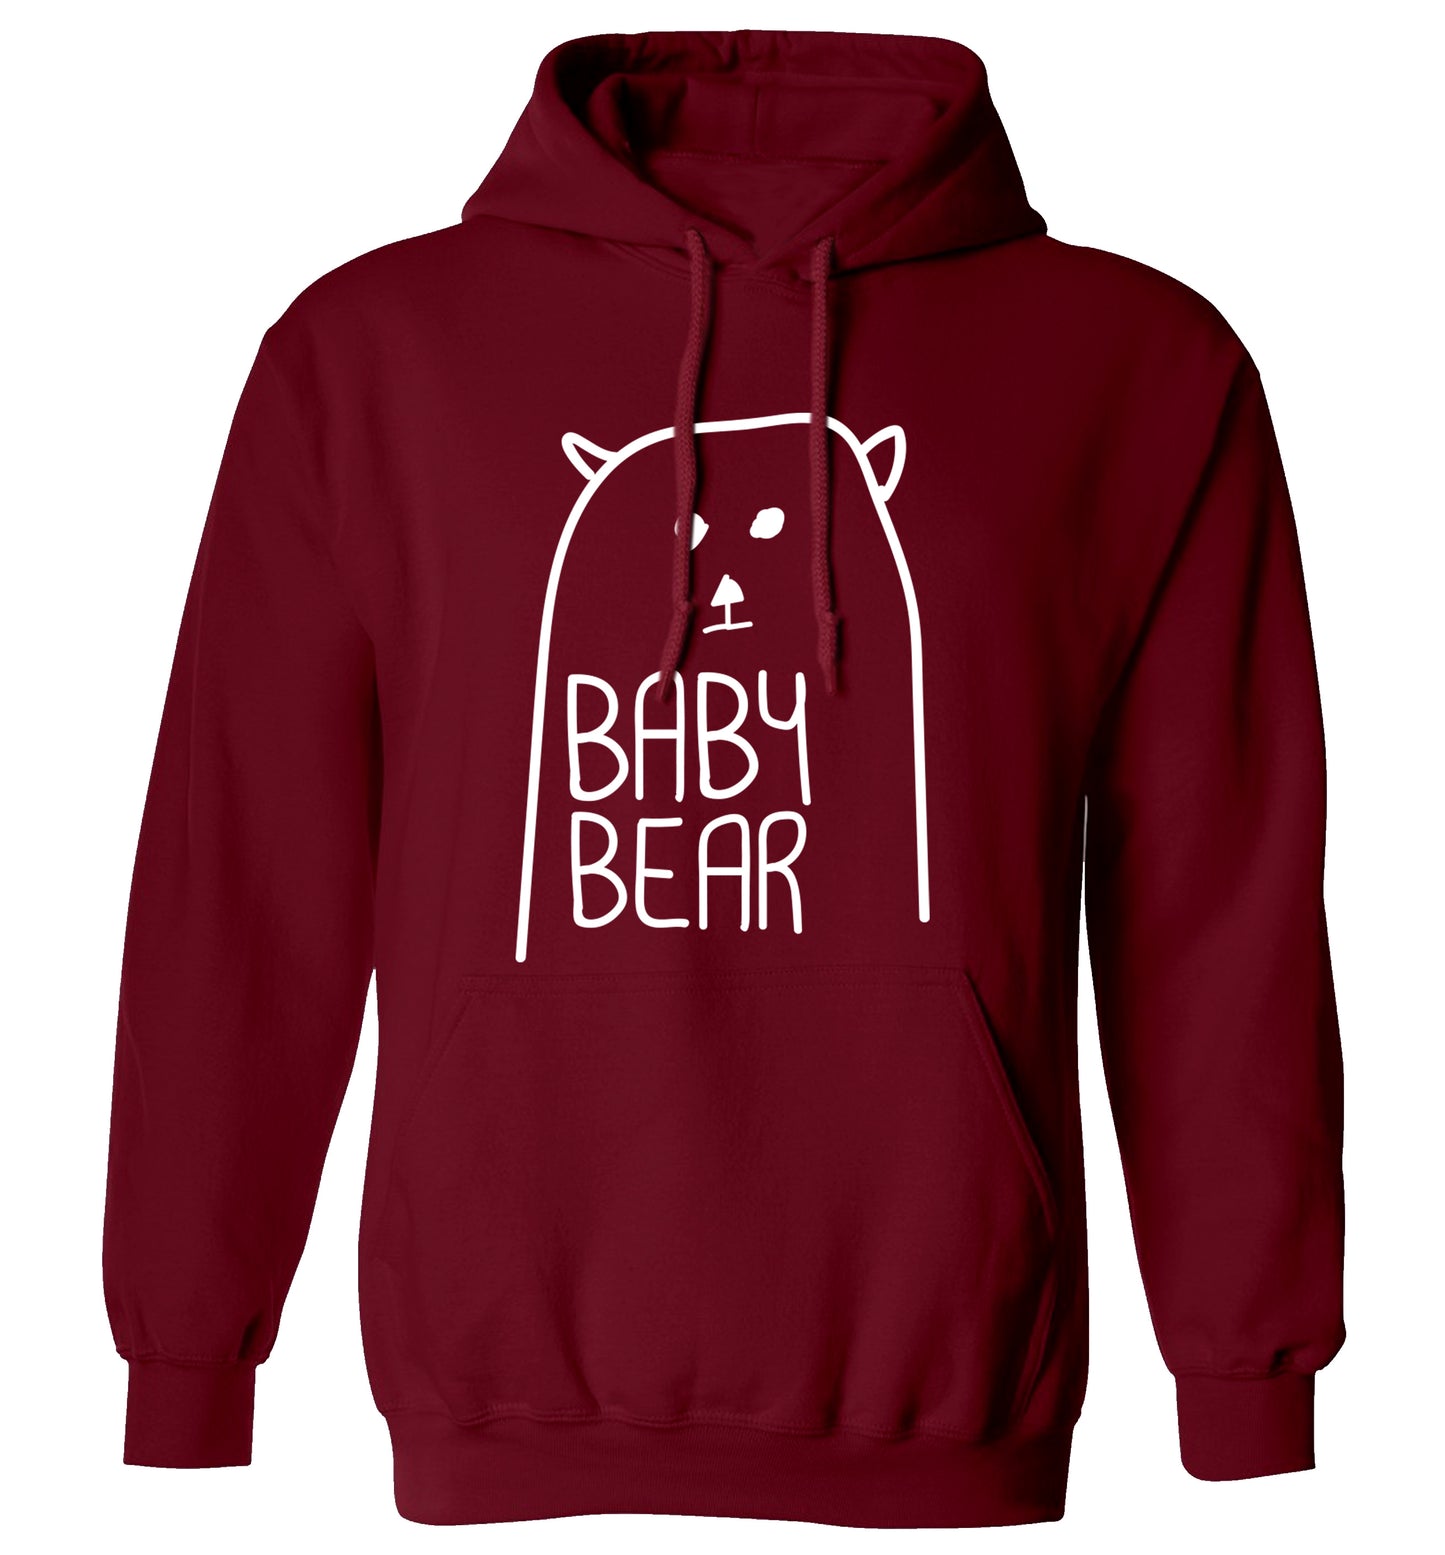 Baby bear adults unisex maroon hoodie 2XL